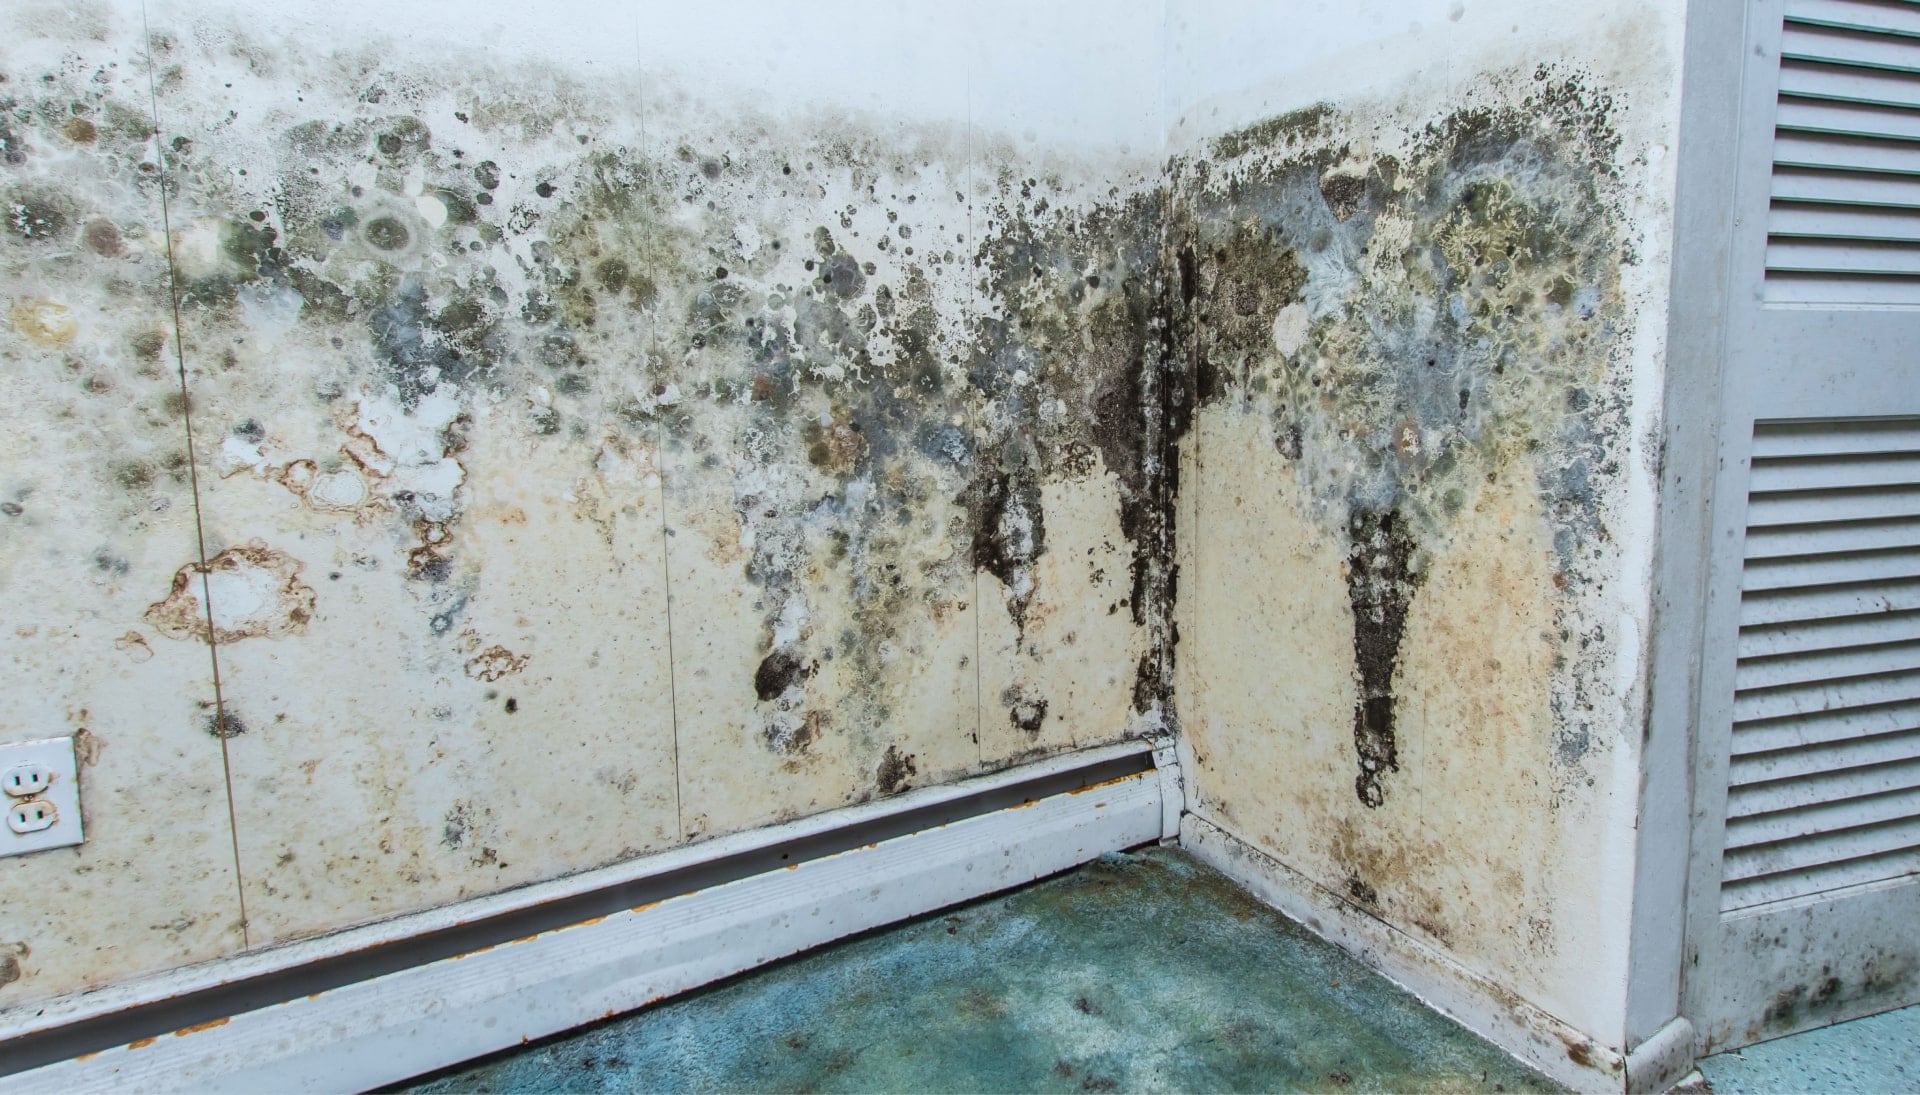 Mold-Damager-Odor-Control in Mesa